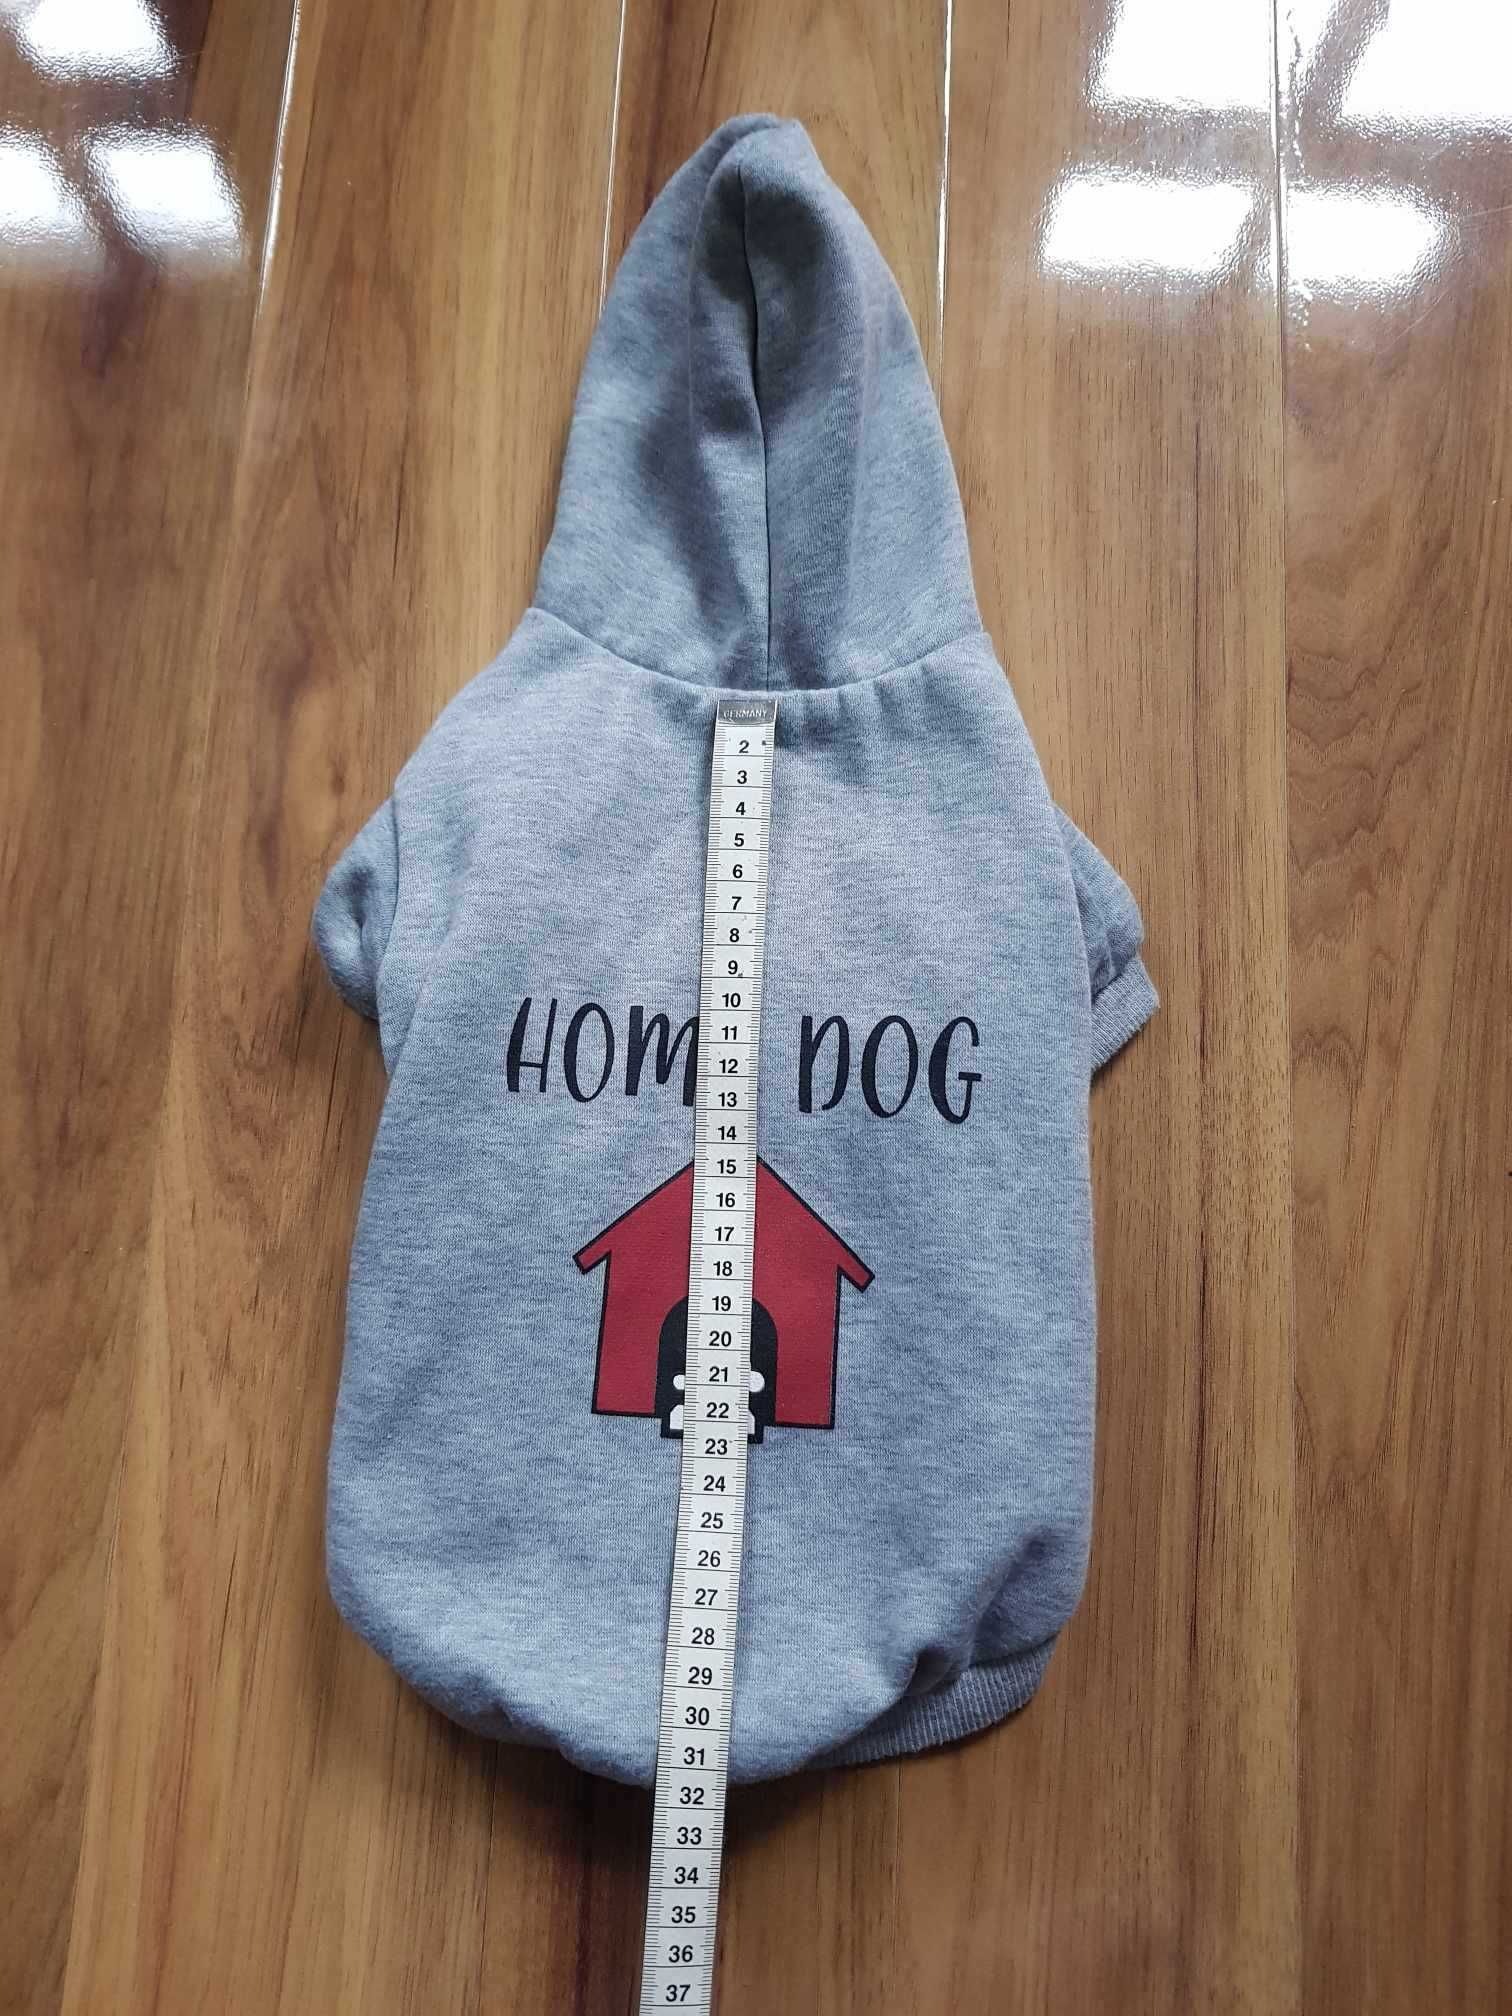 Szara bluza z kapturem dla psa Home Dog Matalan bluza dla pieska